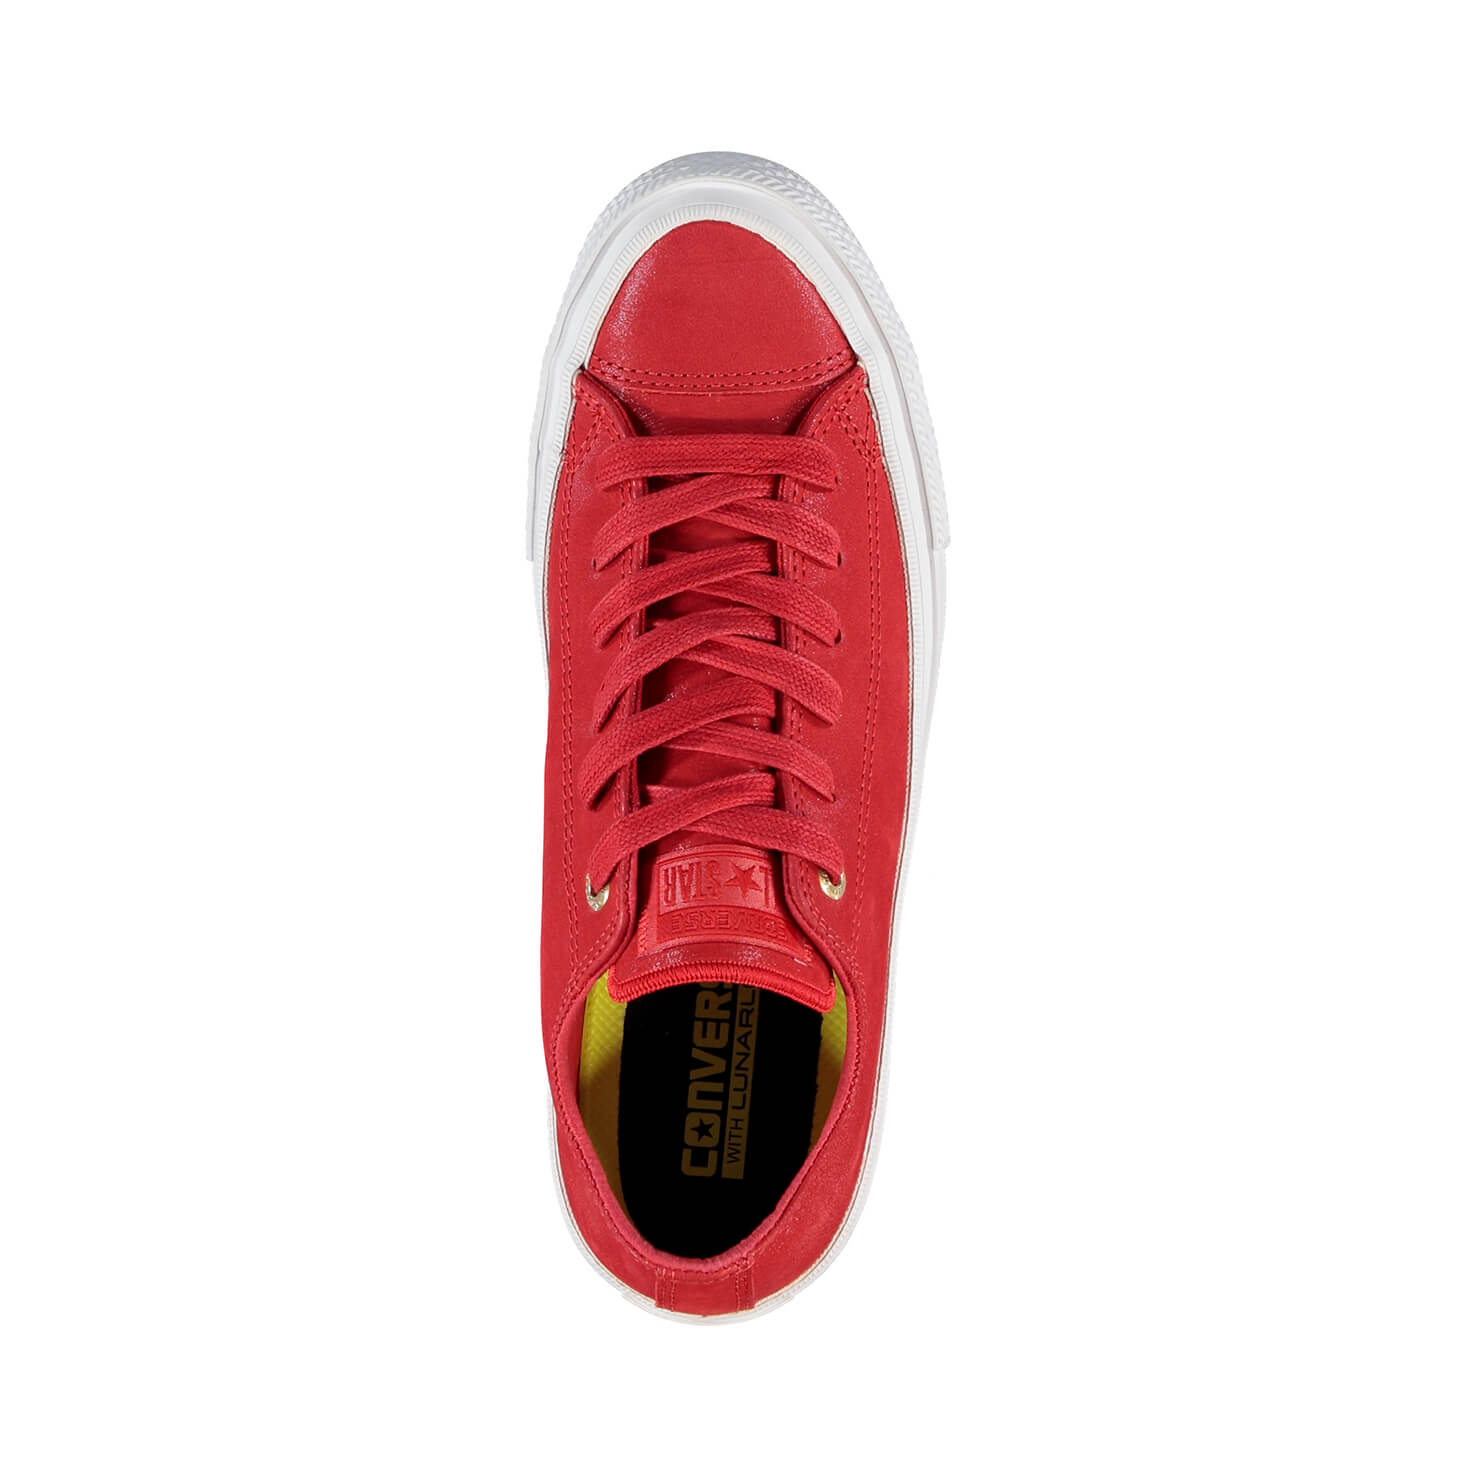 Converse Chuck Taylor All Star Ii Kadın Kırmızı Sneaker